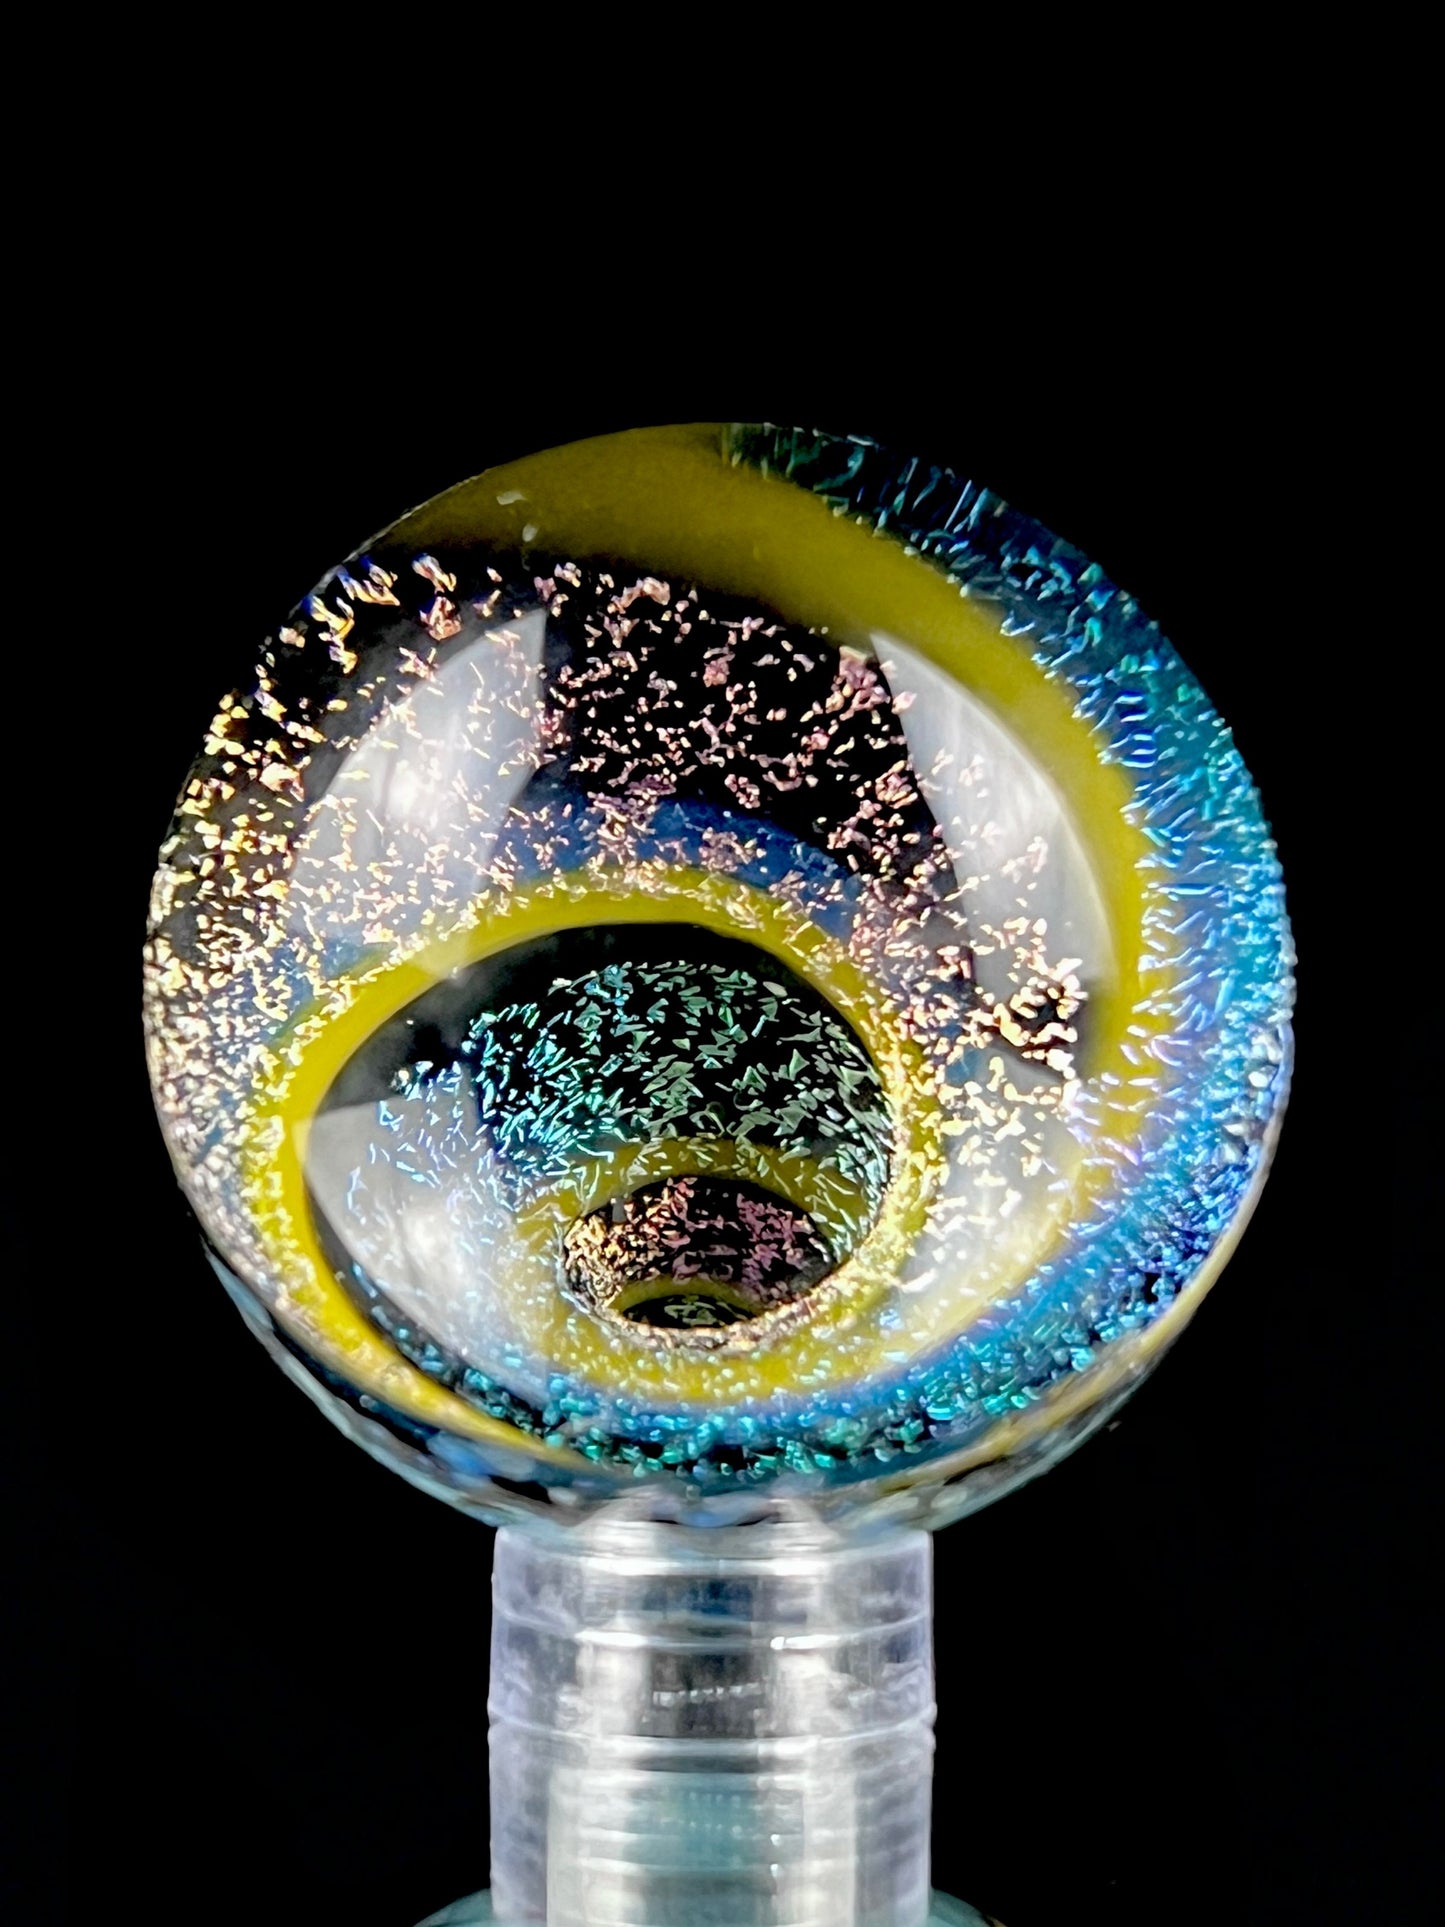 Dichro vortex marble by Subtl